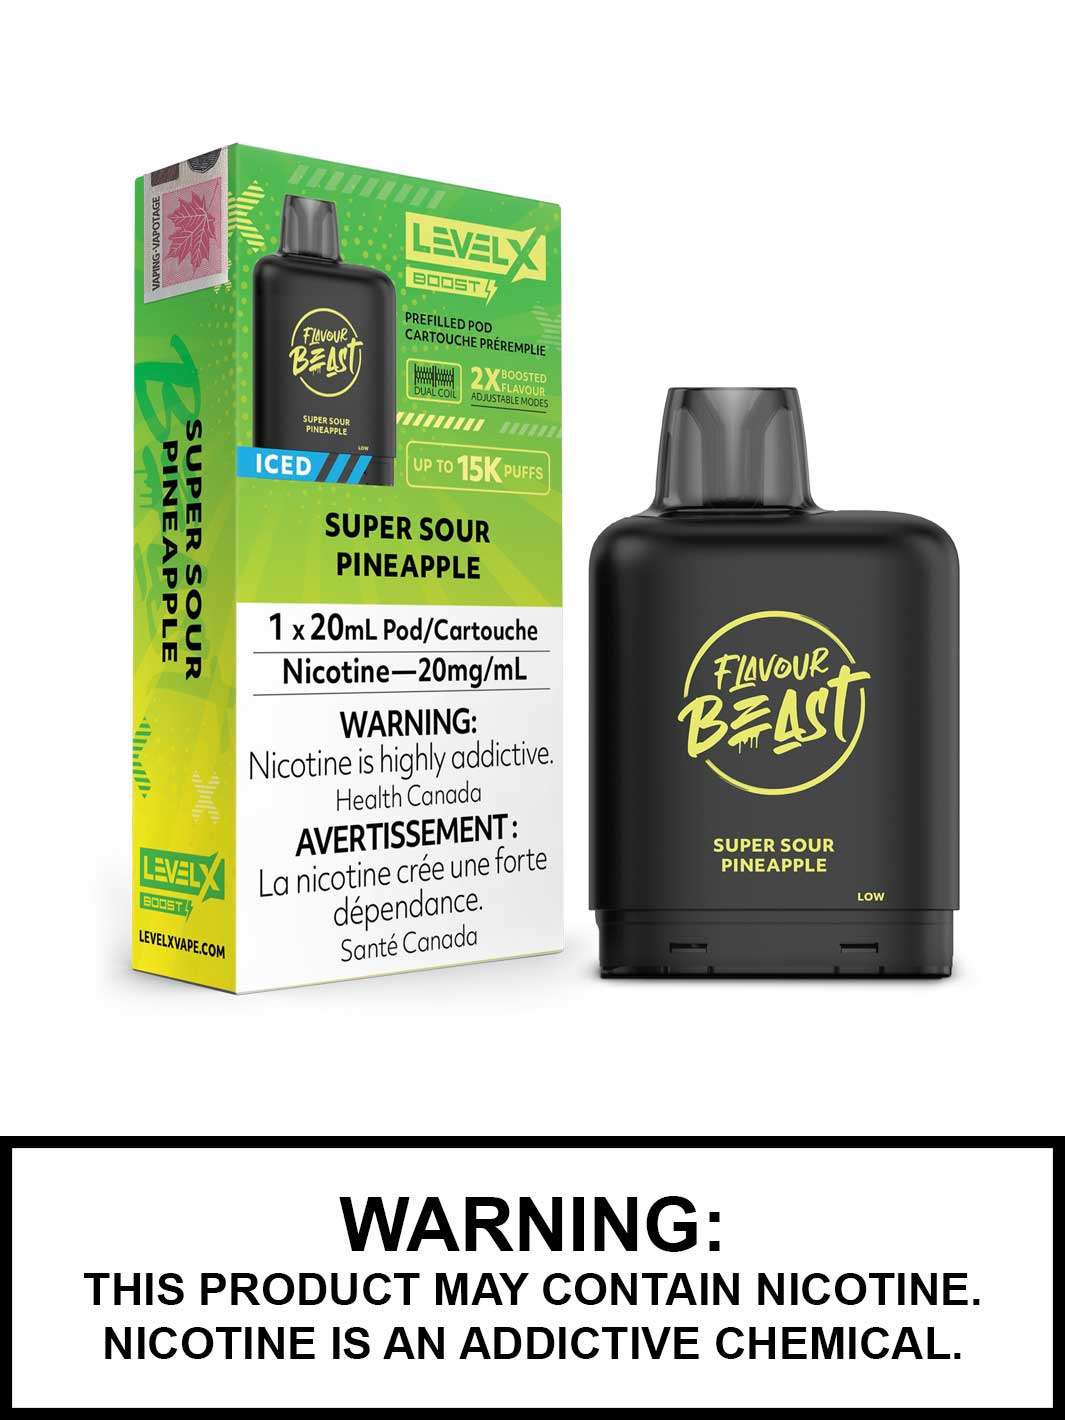 Super Sour Pineapple Iced Flavour Beast Level X Boost Pods, Level X Vape, Vape360 Canada